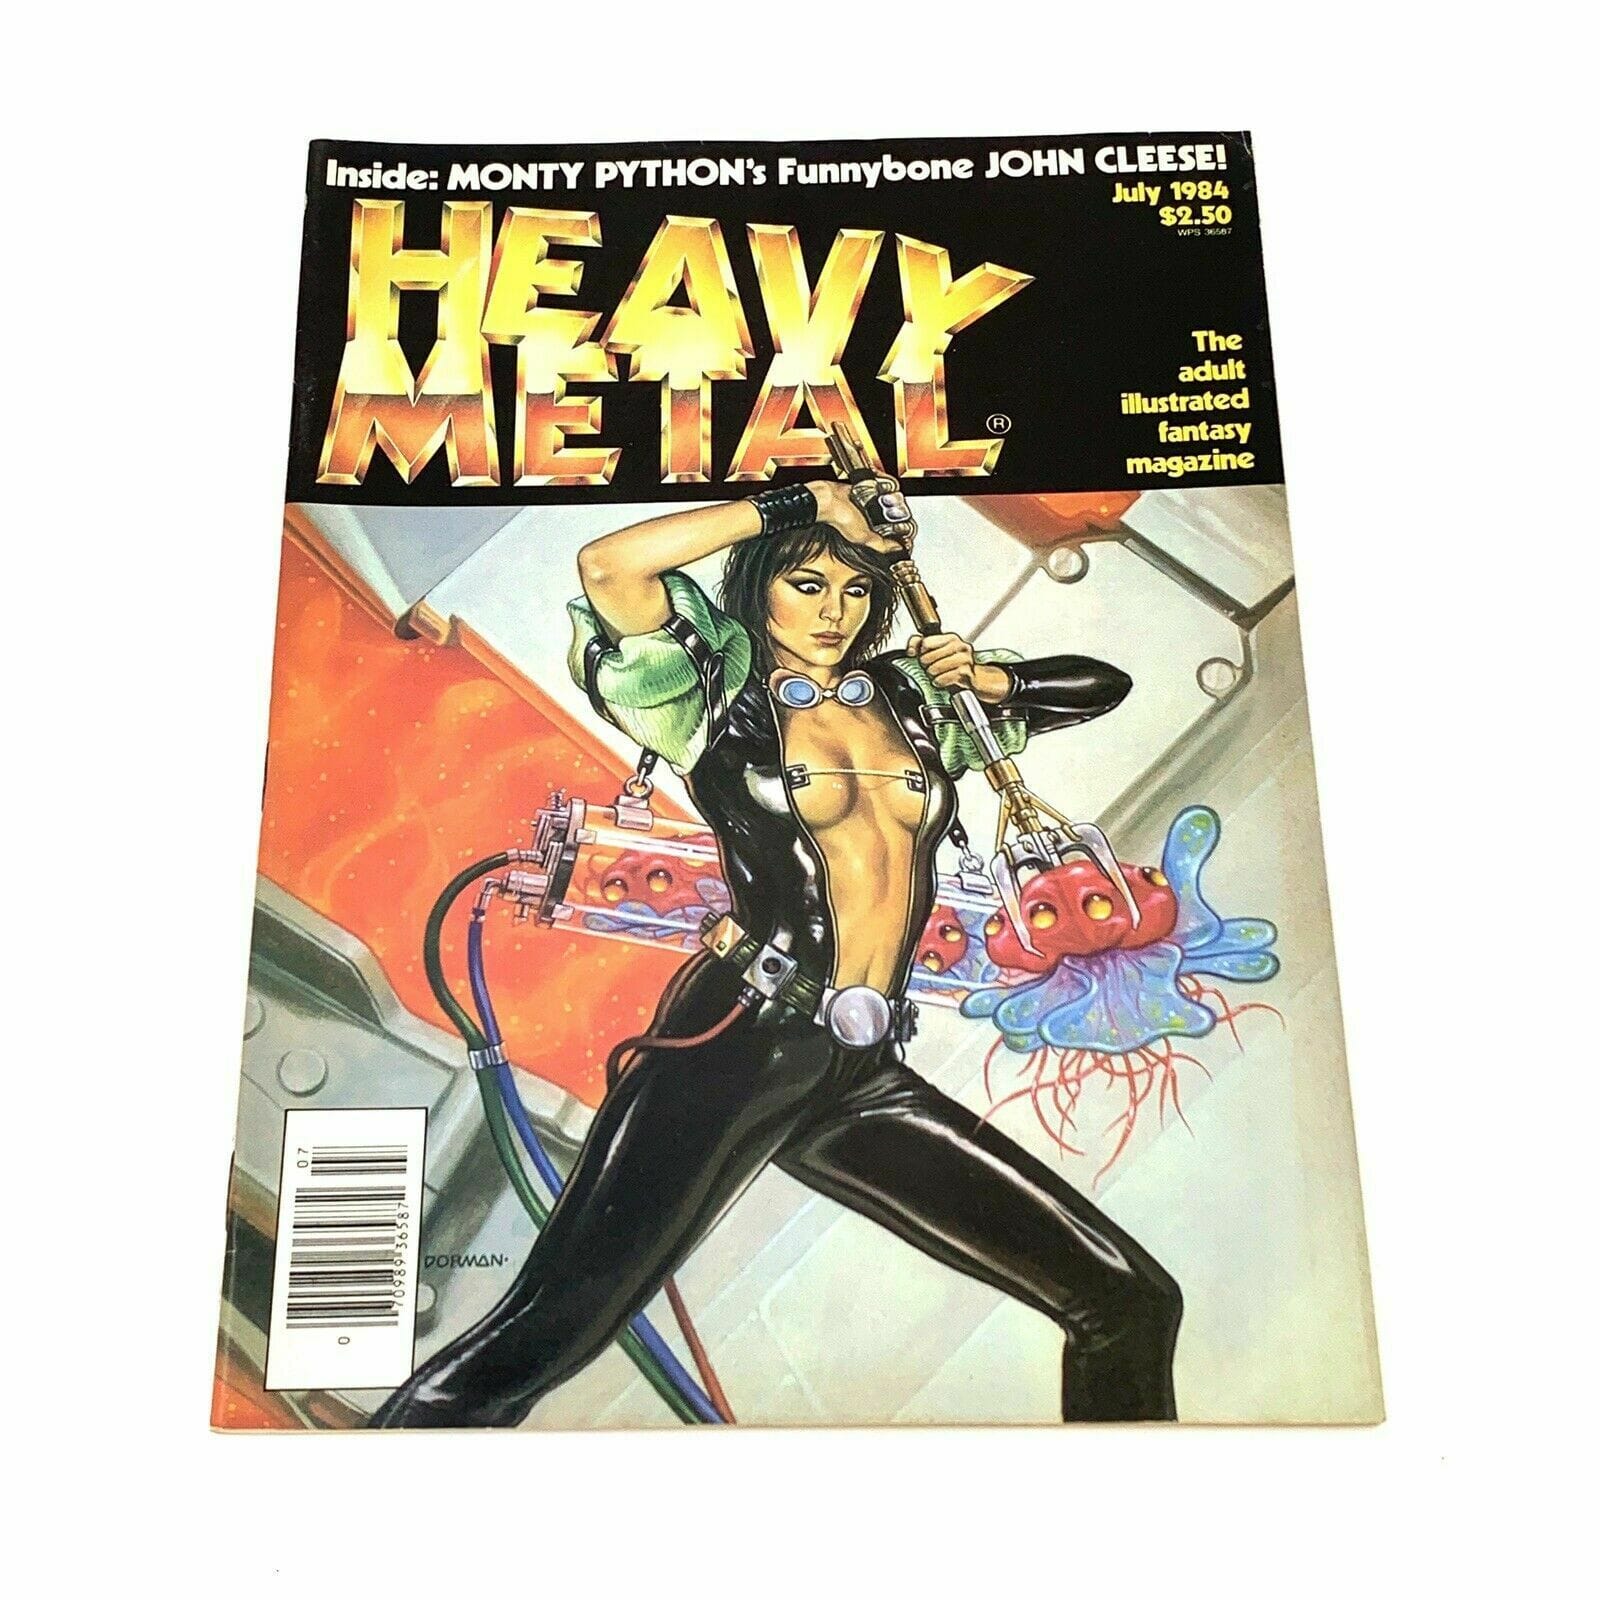 HEAVY METAL - Adult Illustrative Fantasy Magazine - July 1984 - parsimonyshoppes